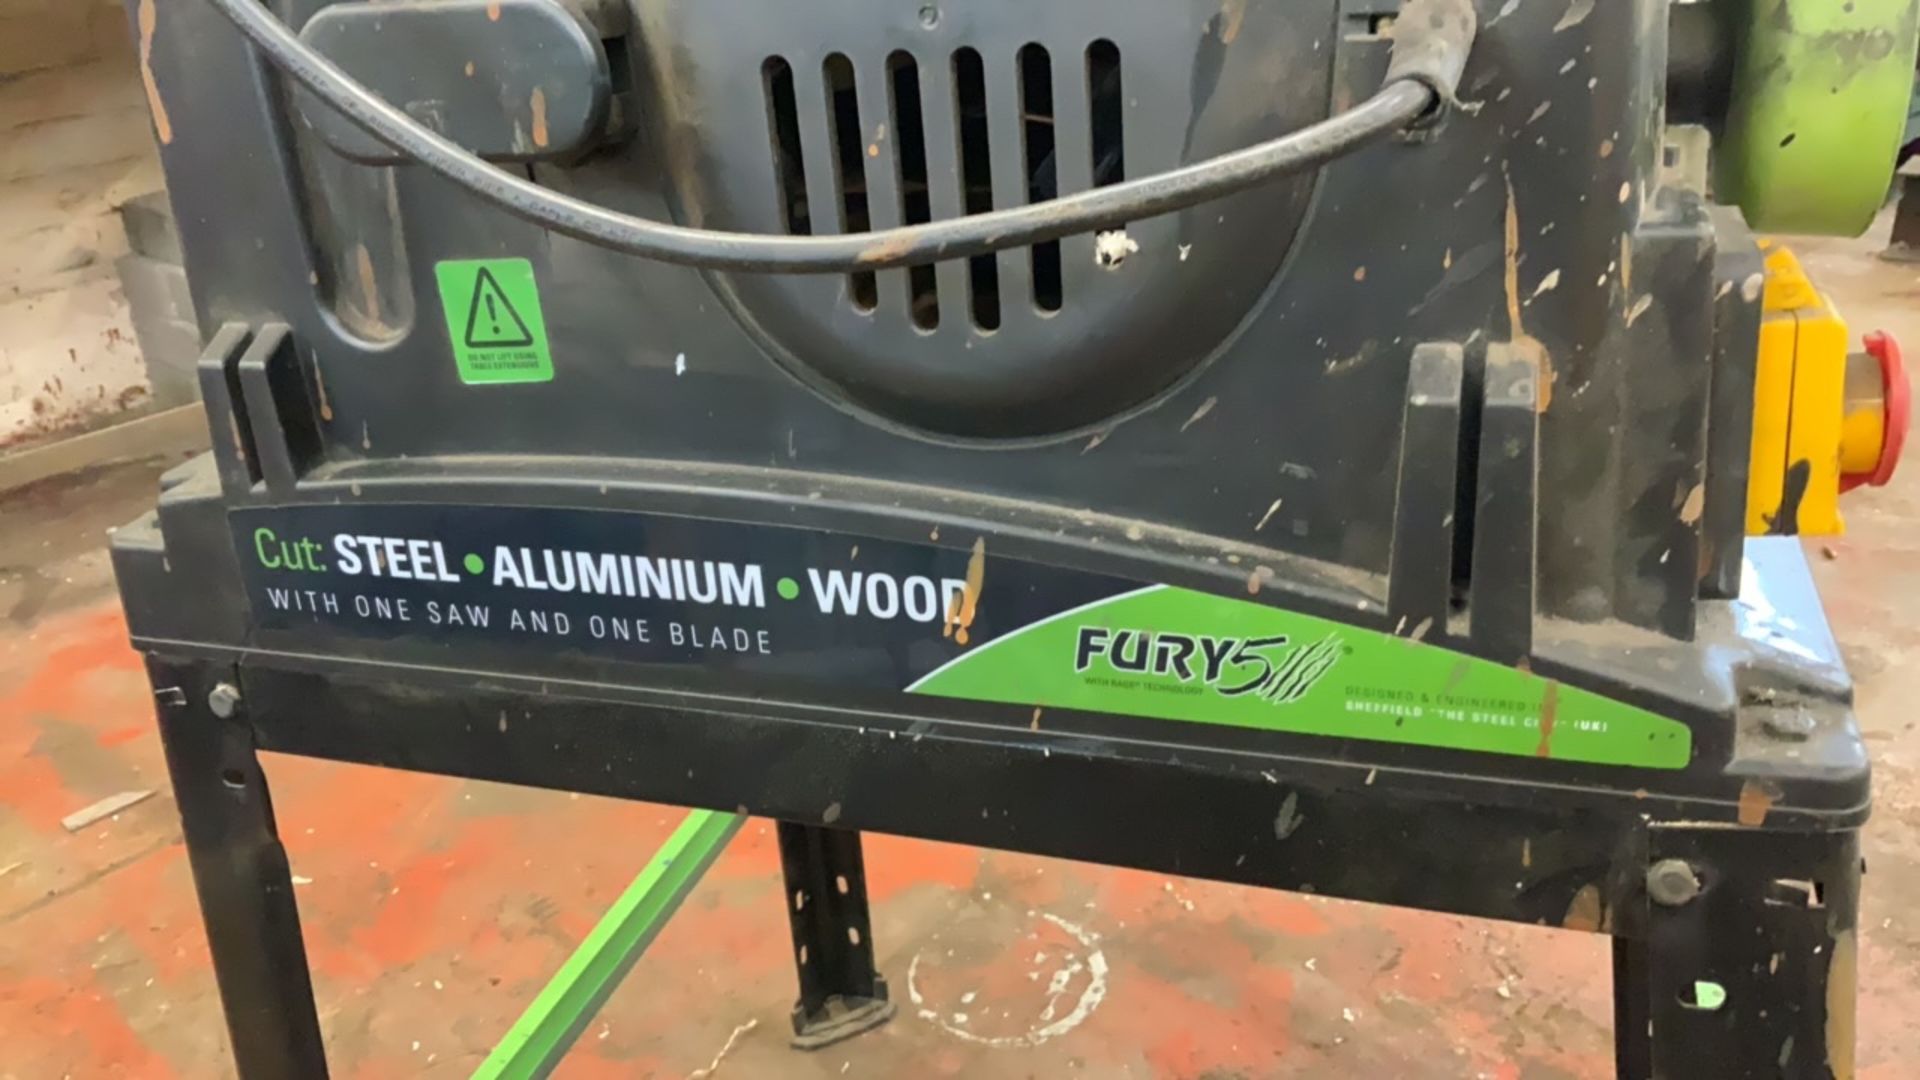 Fury 5 Saw Table Saw - Cut Steel, Aluminium & Wood with one blade, Serial No.K132U0464 - Image 10 of 14